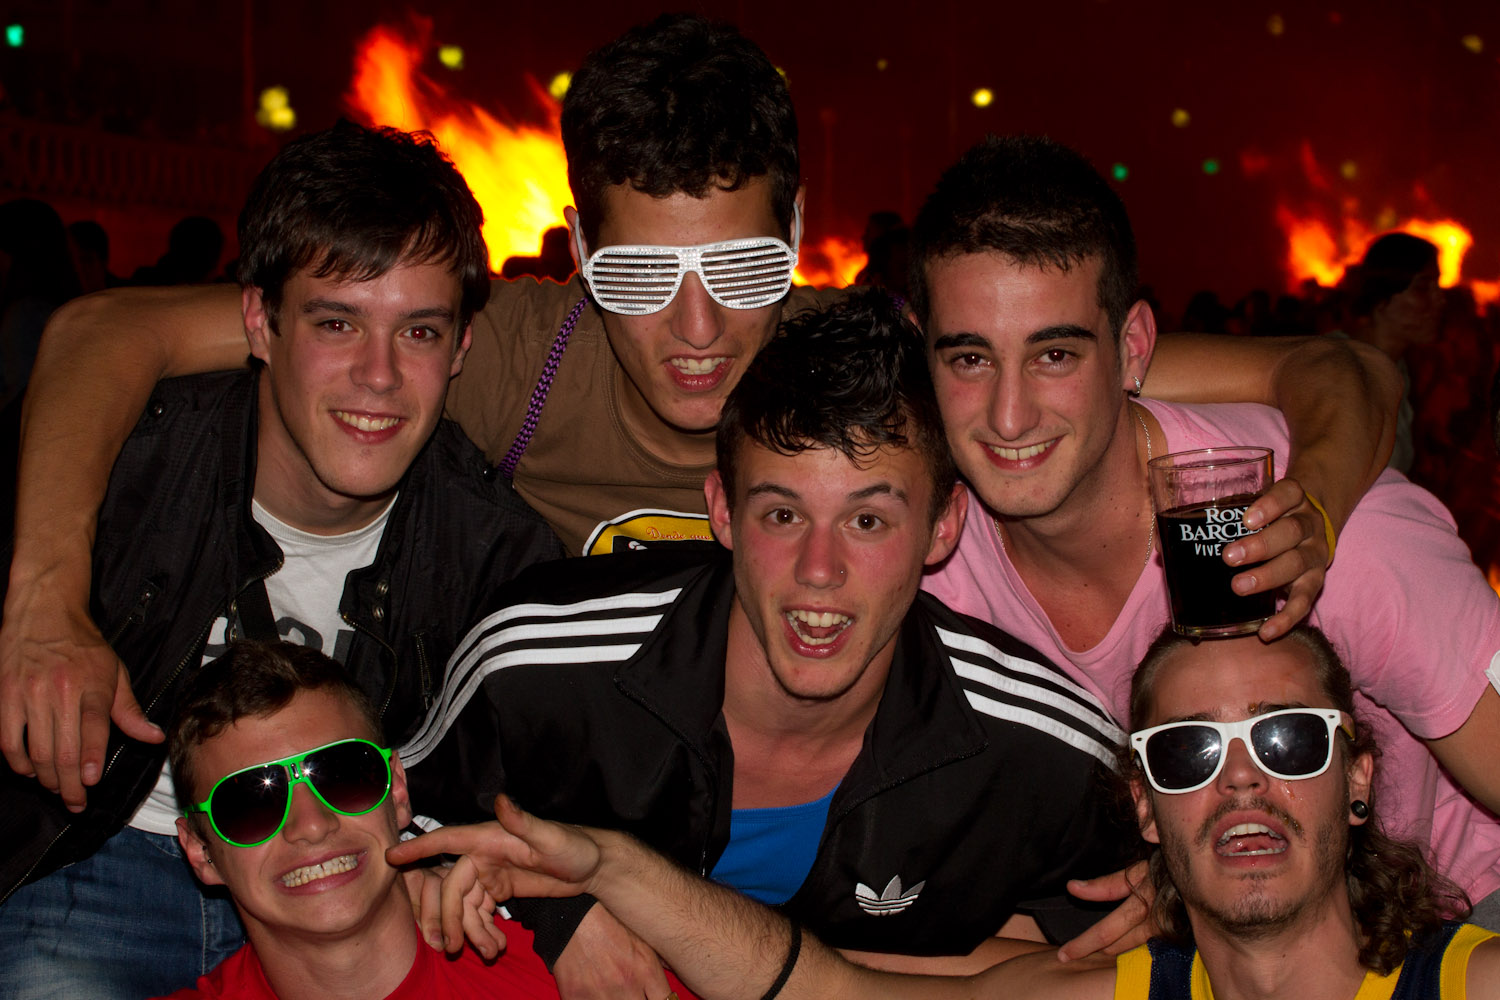 Chicos celebrando la fiesta de San Juan en La Coruña, España